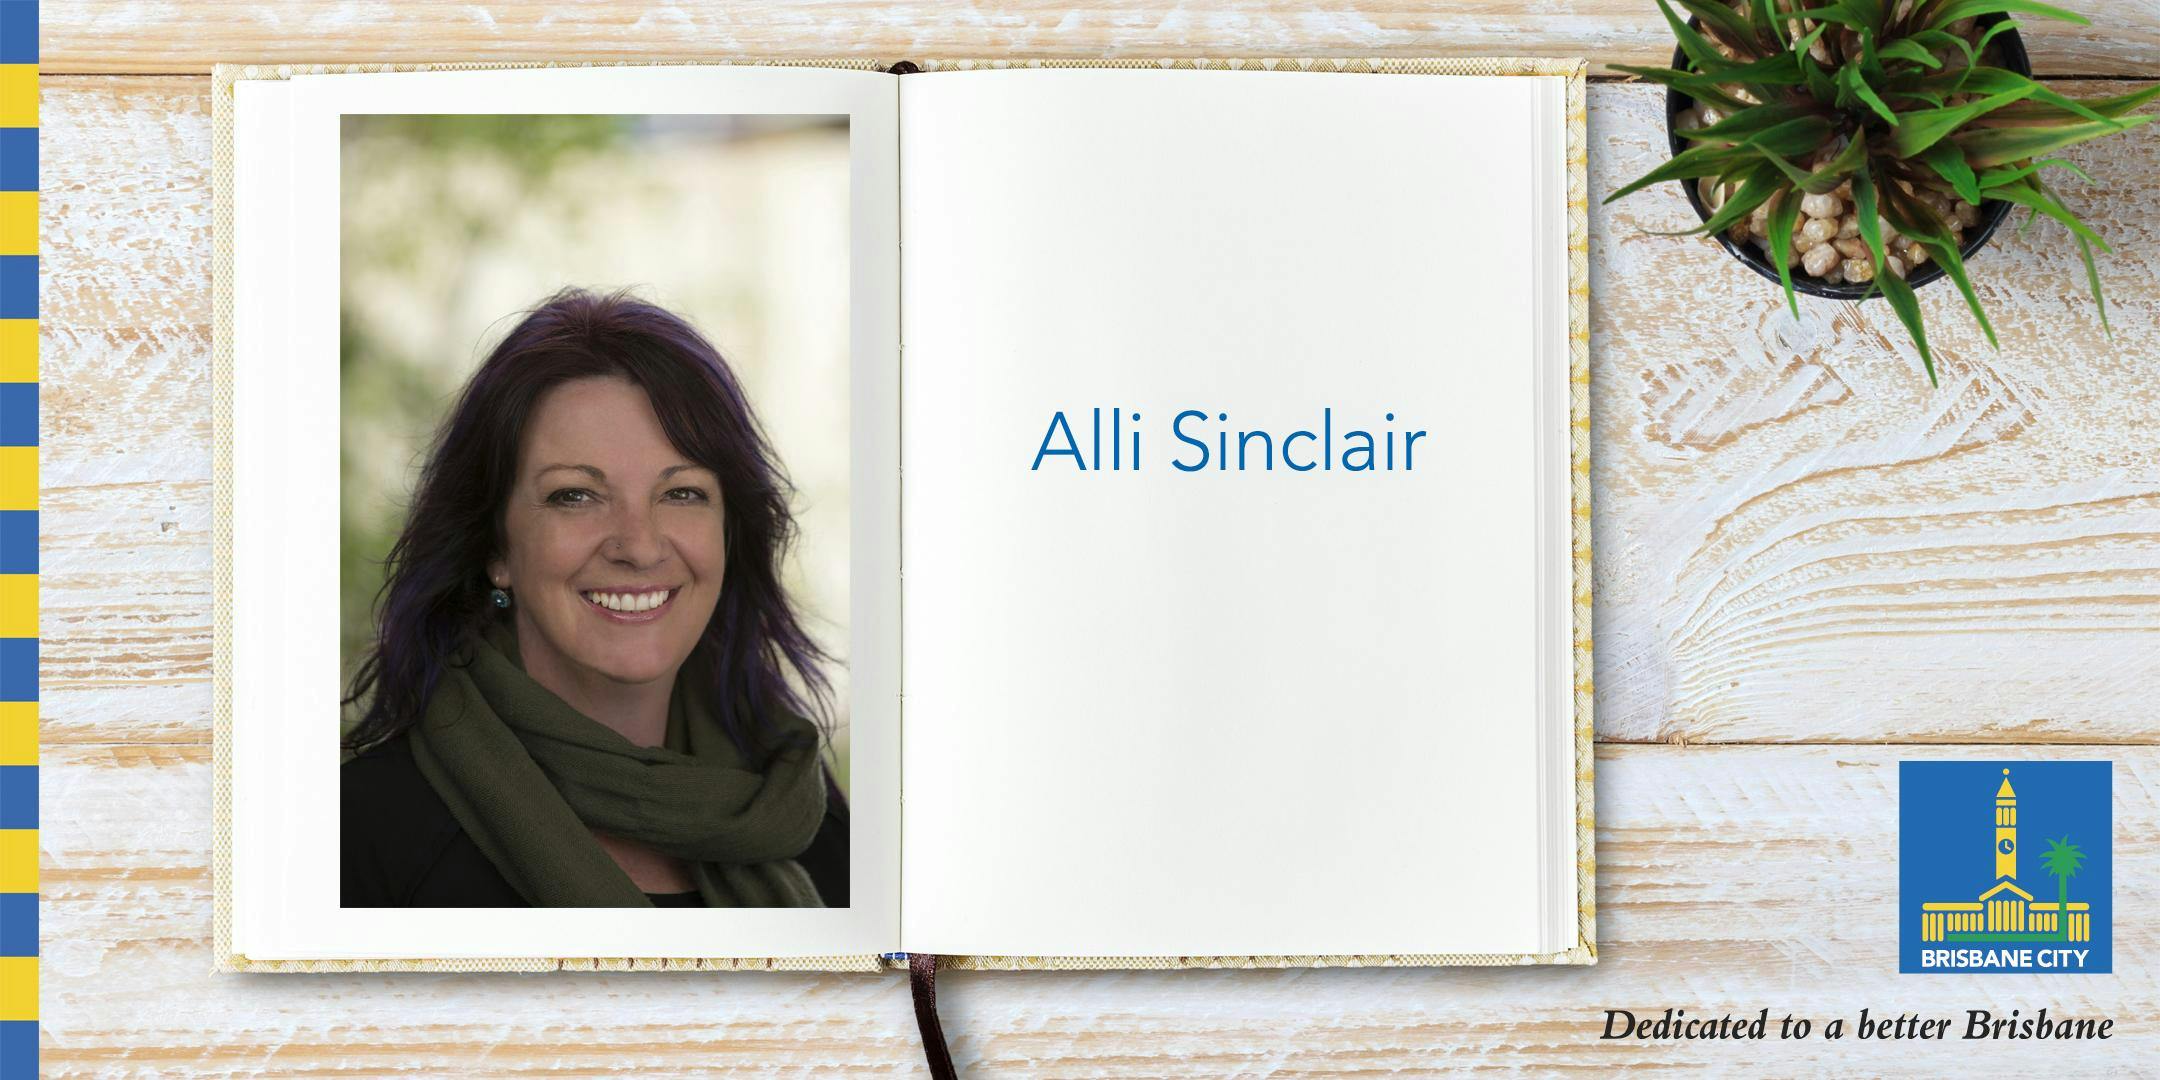 Meet Alli Sinclair - Inala Library